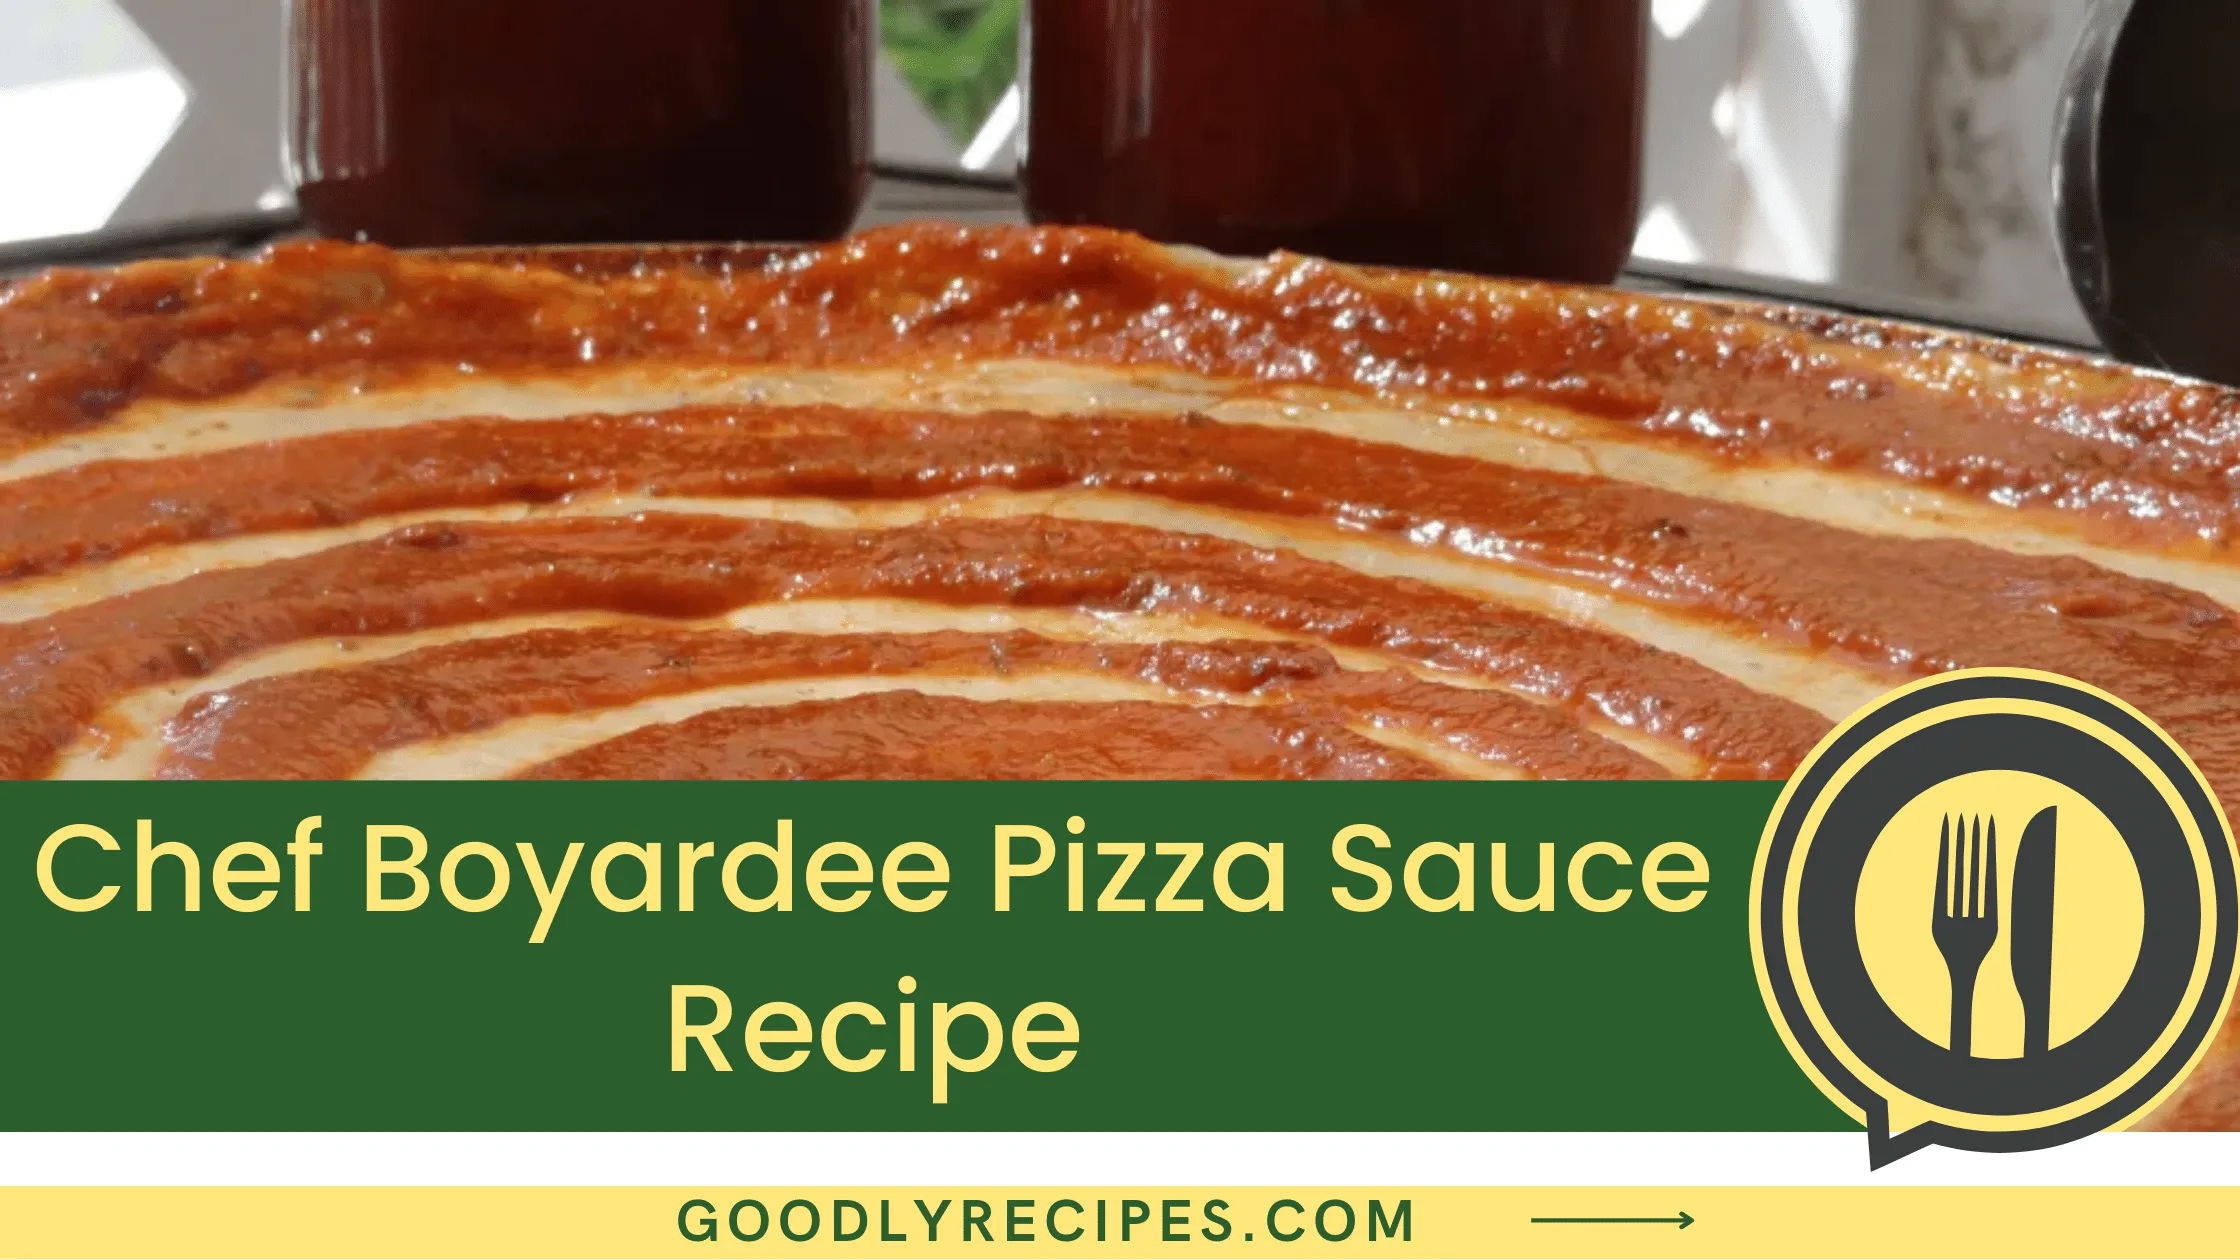 What Is Chef Boyardee Pizza Sauce?